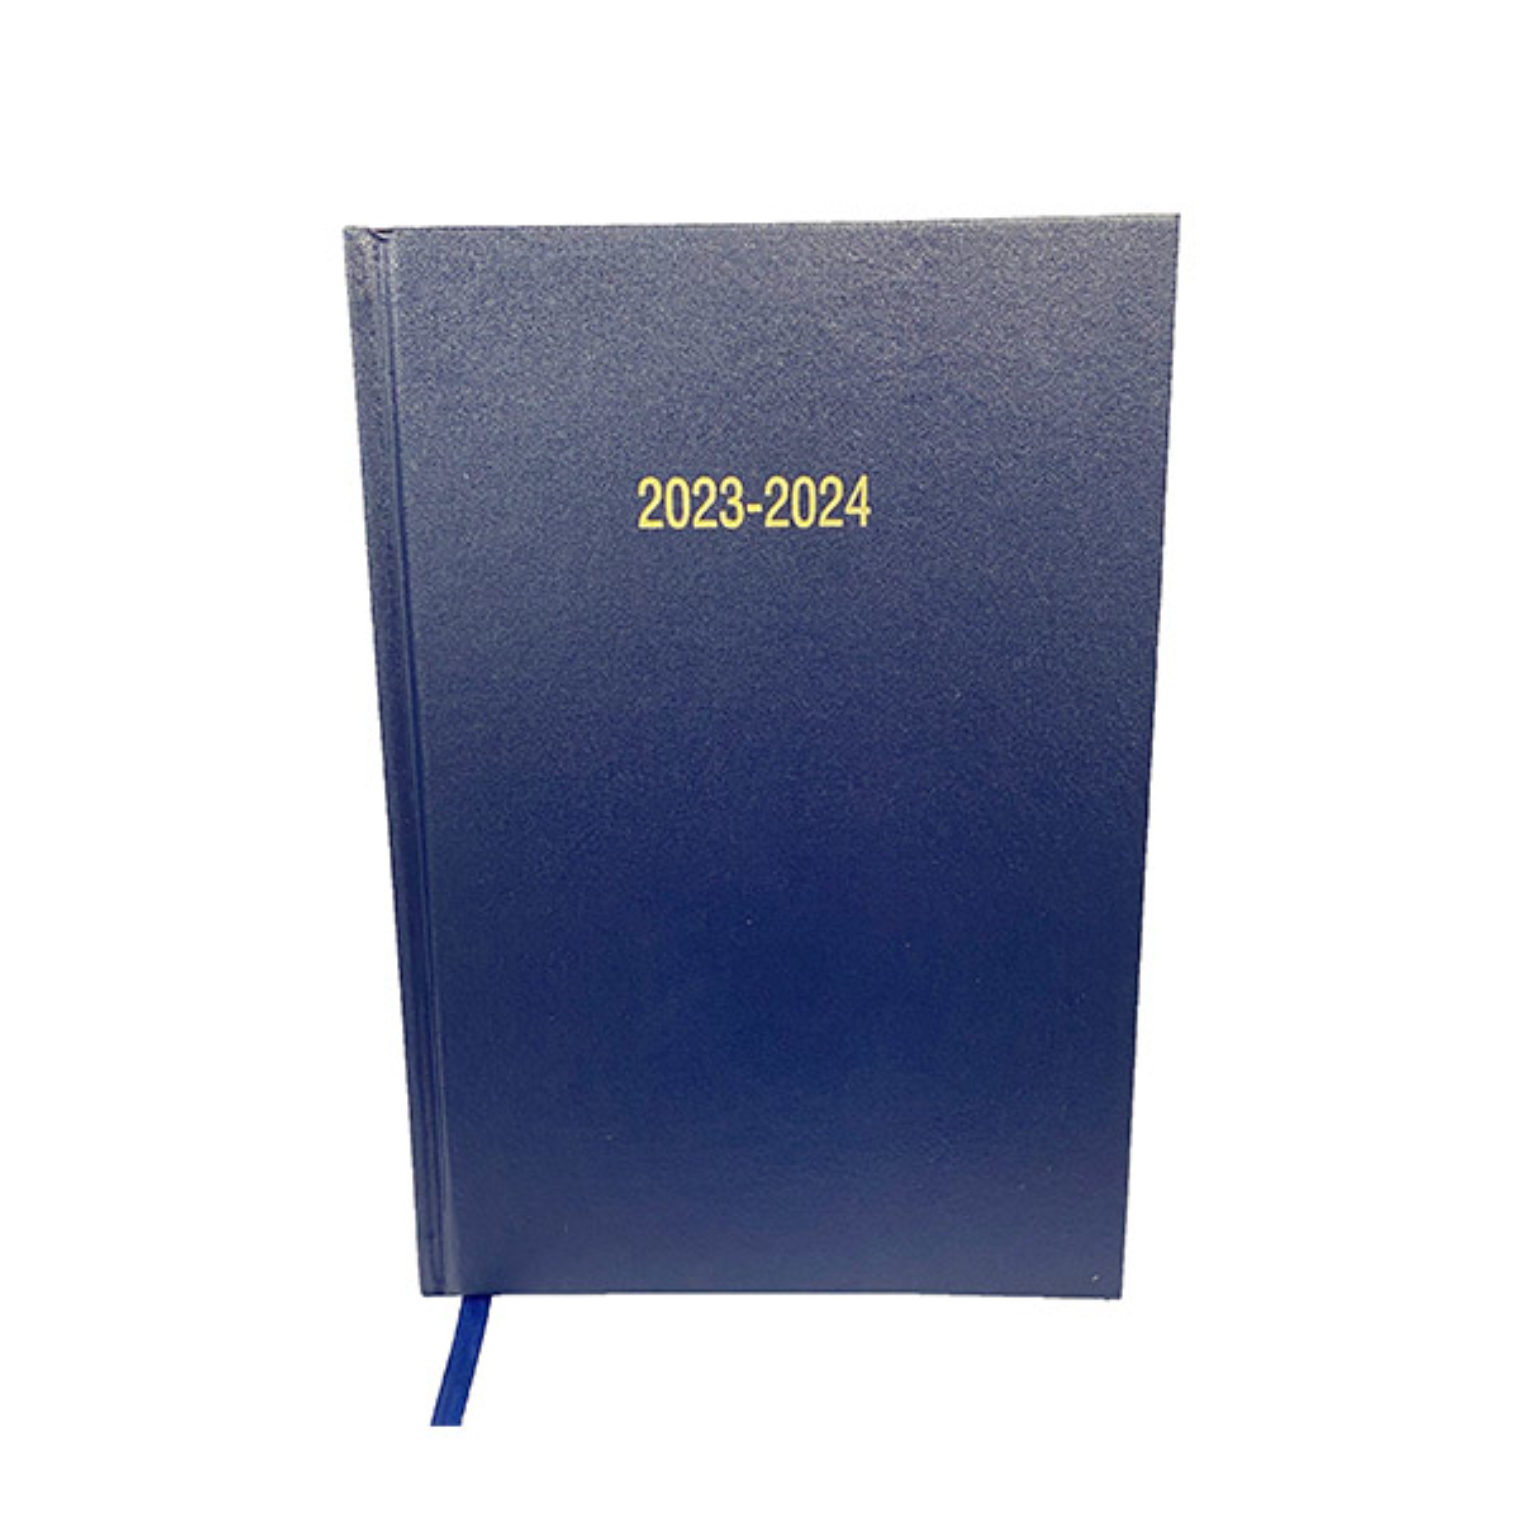 2022/23 Academic Diaries - Navy Blue